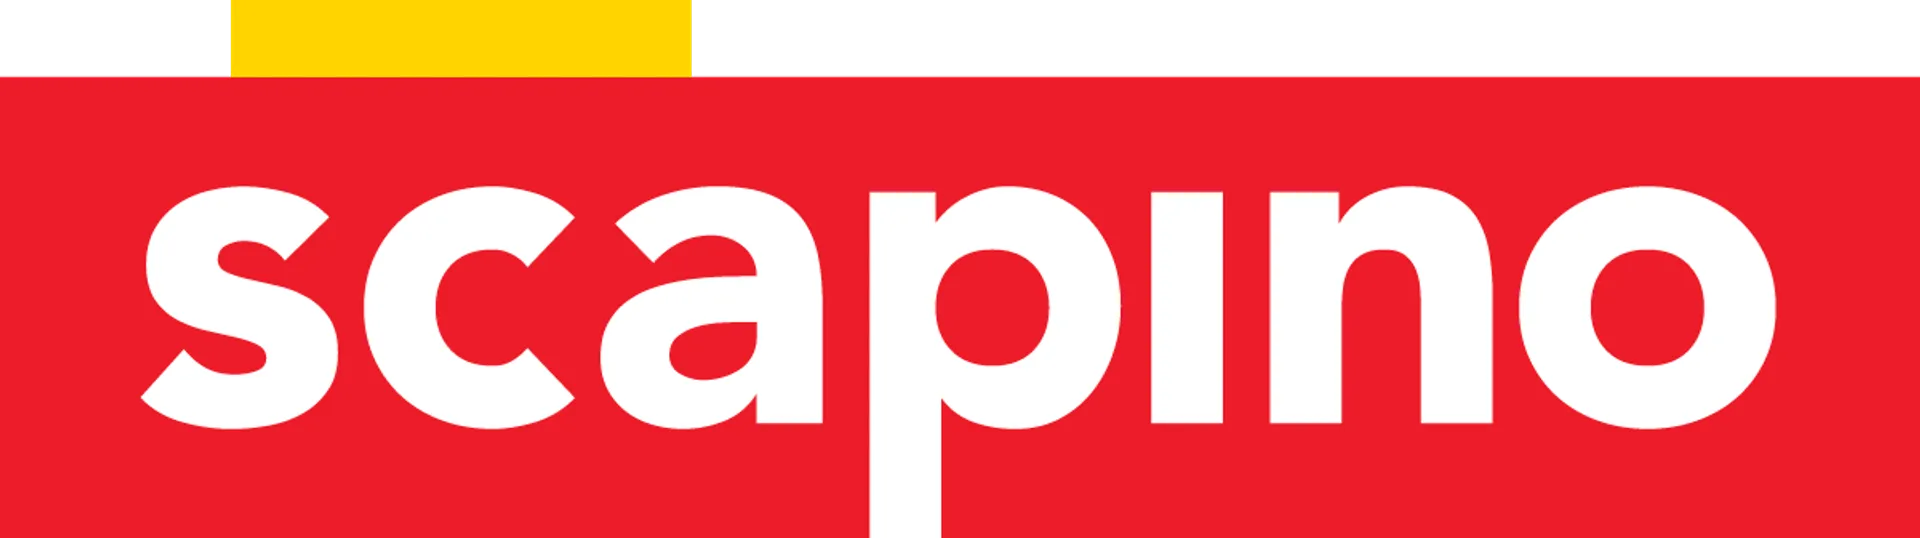 SCAPINO logo